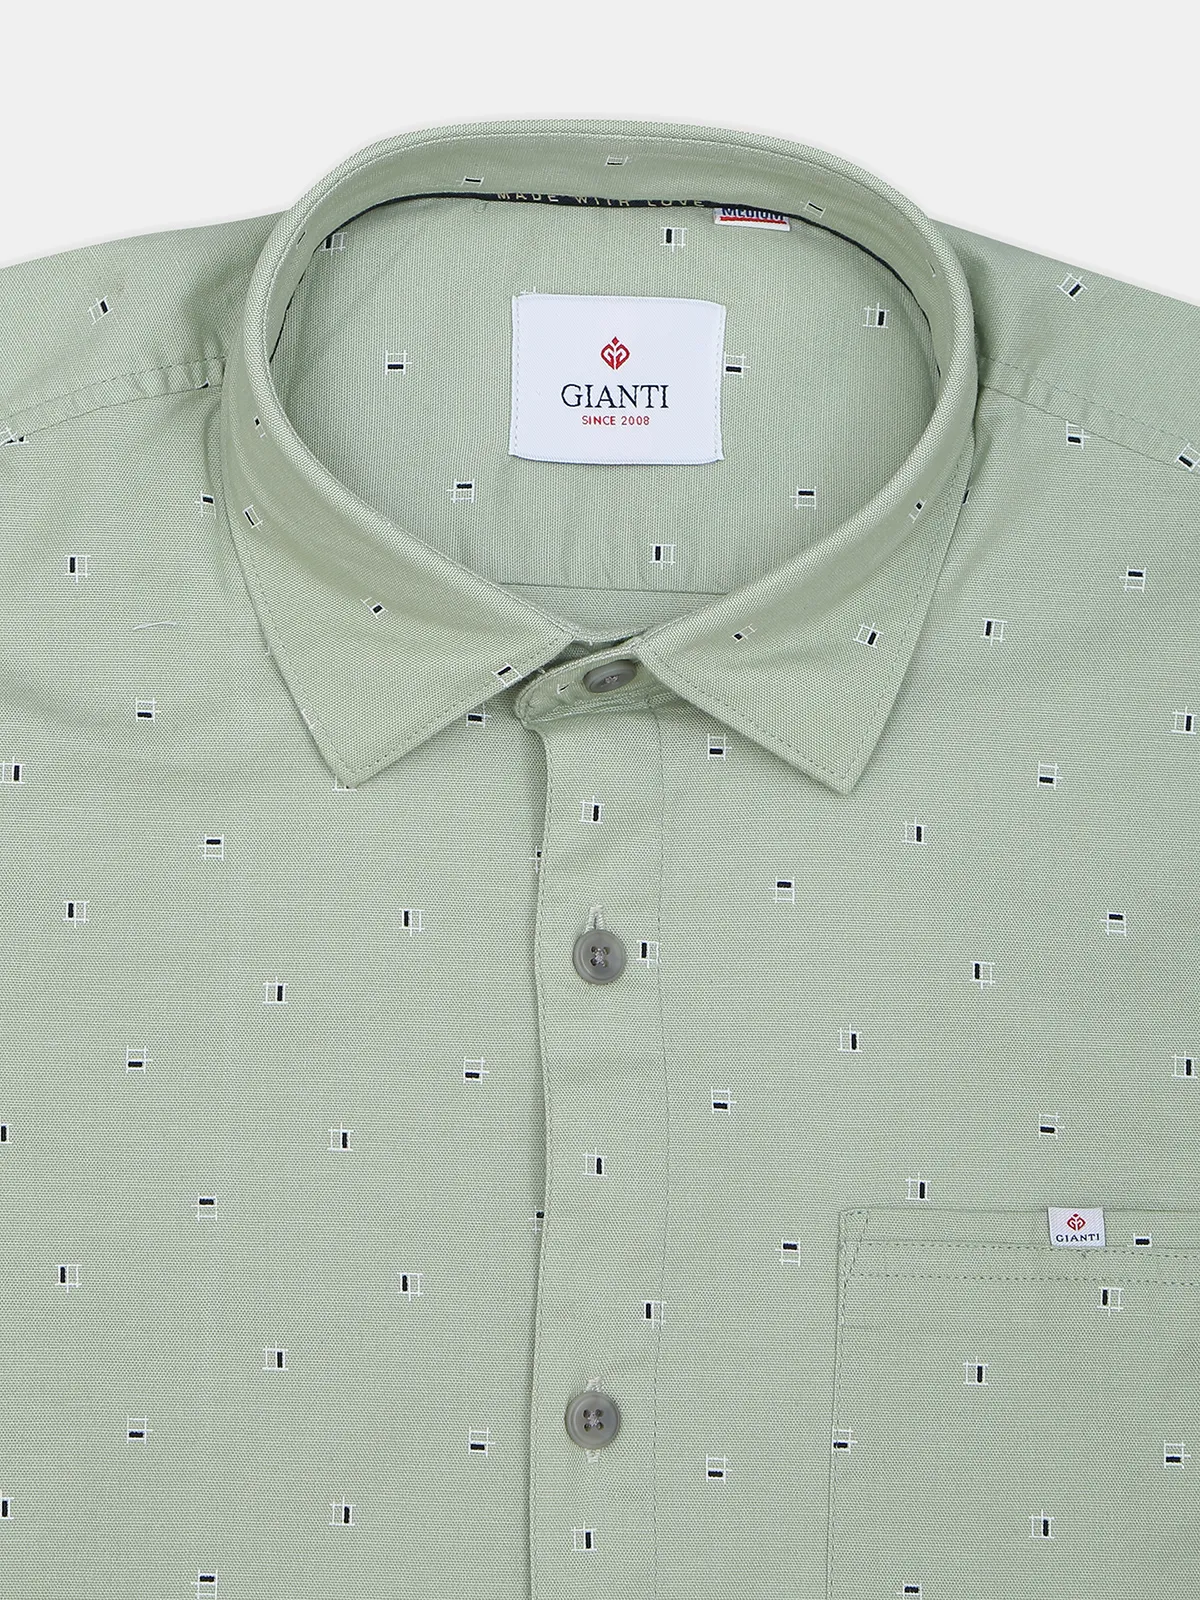 Gianti pista green printed cotton casual shirt